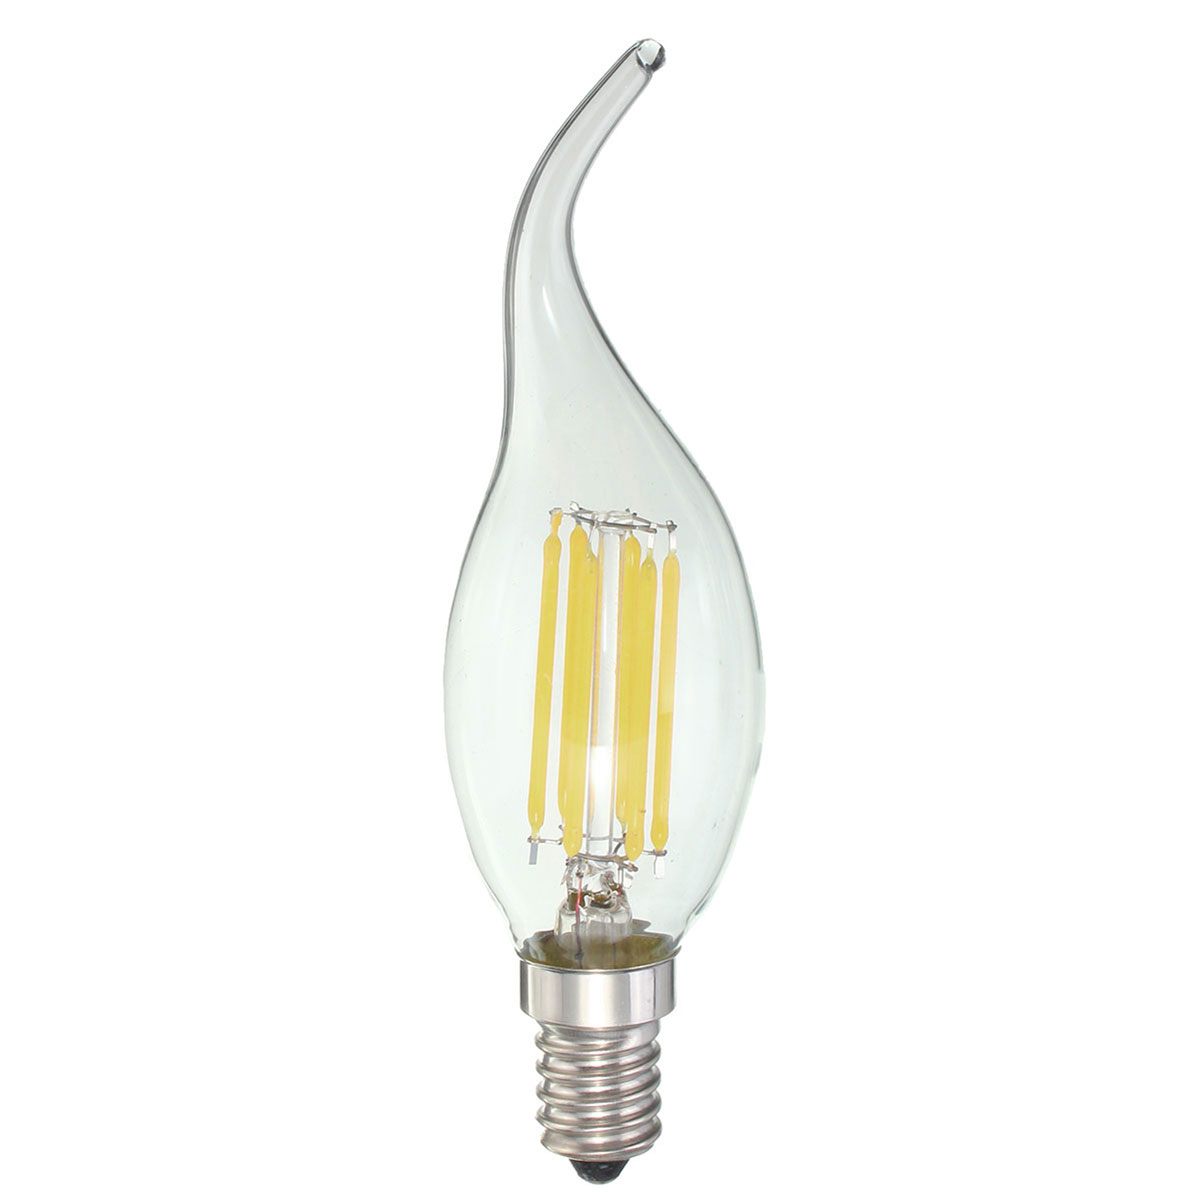 Dimmable-E14-6W-COB-600Lm-Edison-Filament-Bulb-LED-Light-Candle-AC-110V-1067052-10